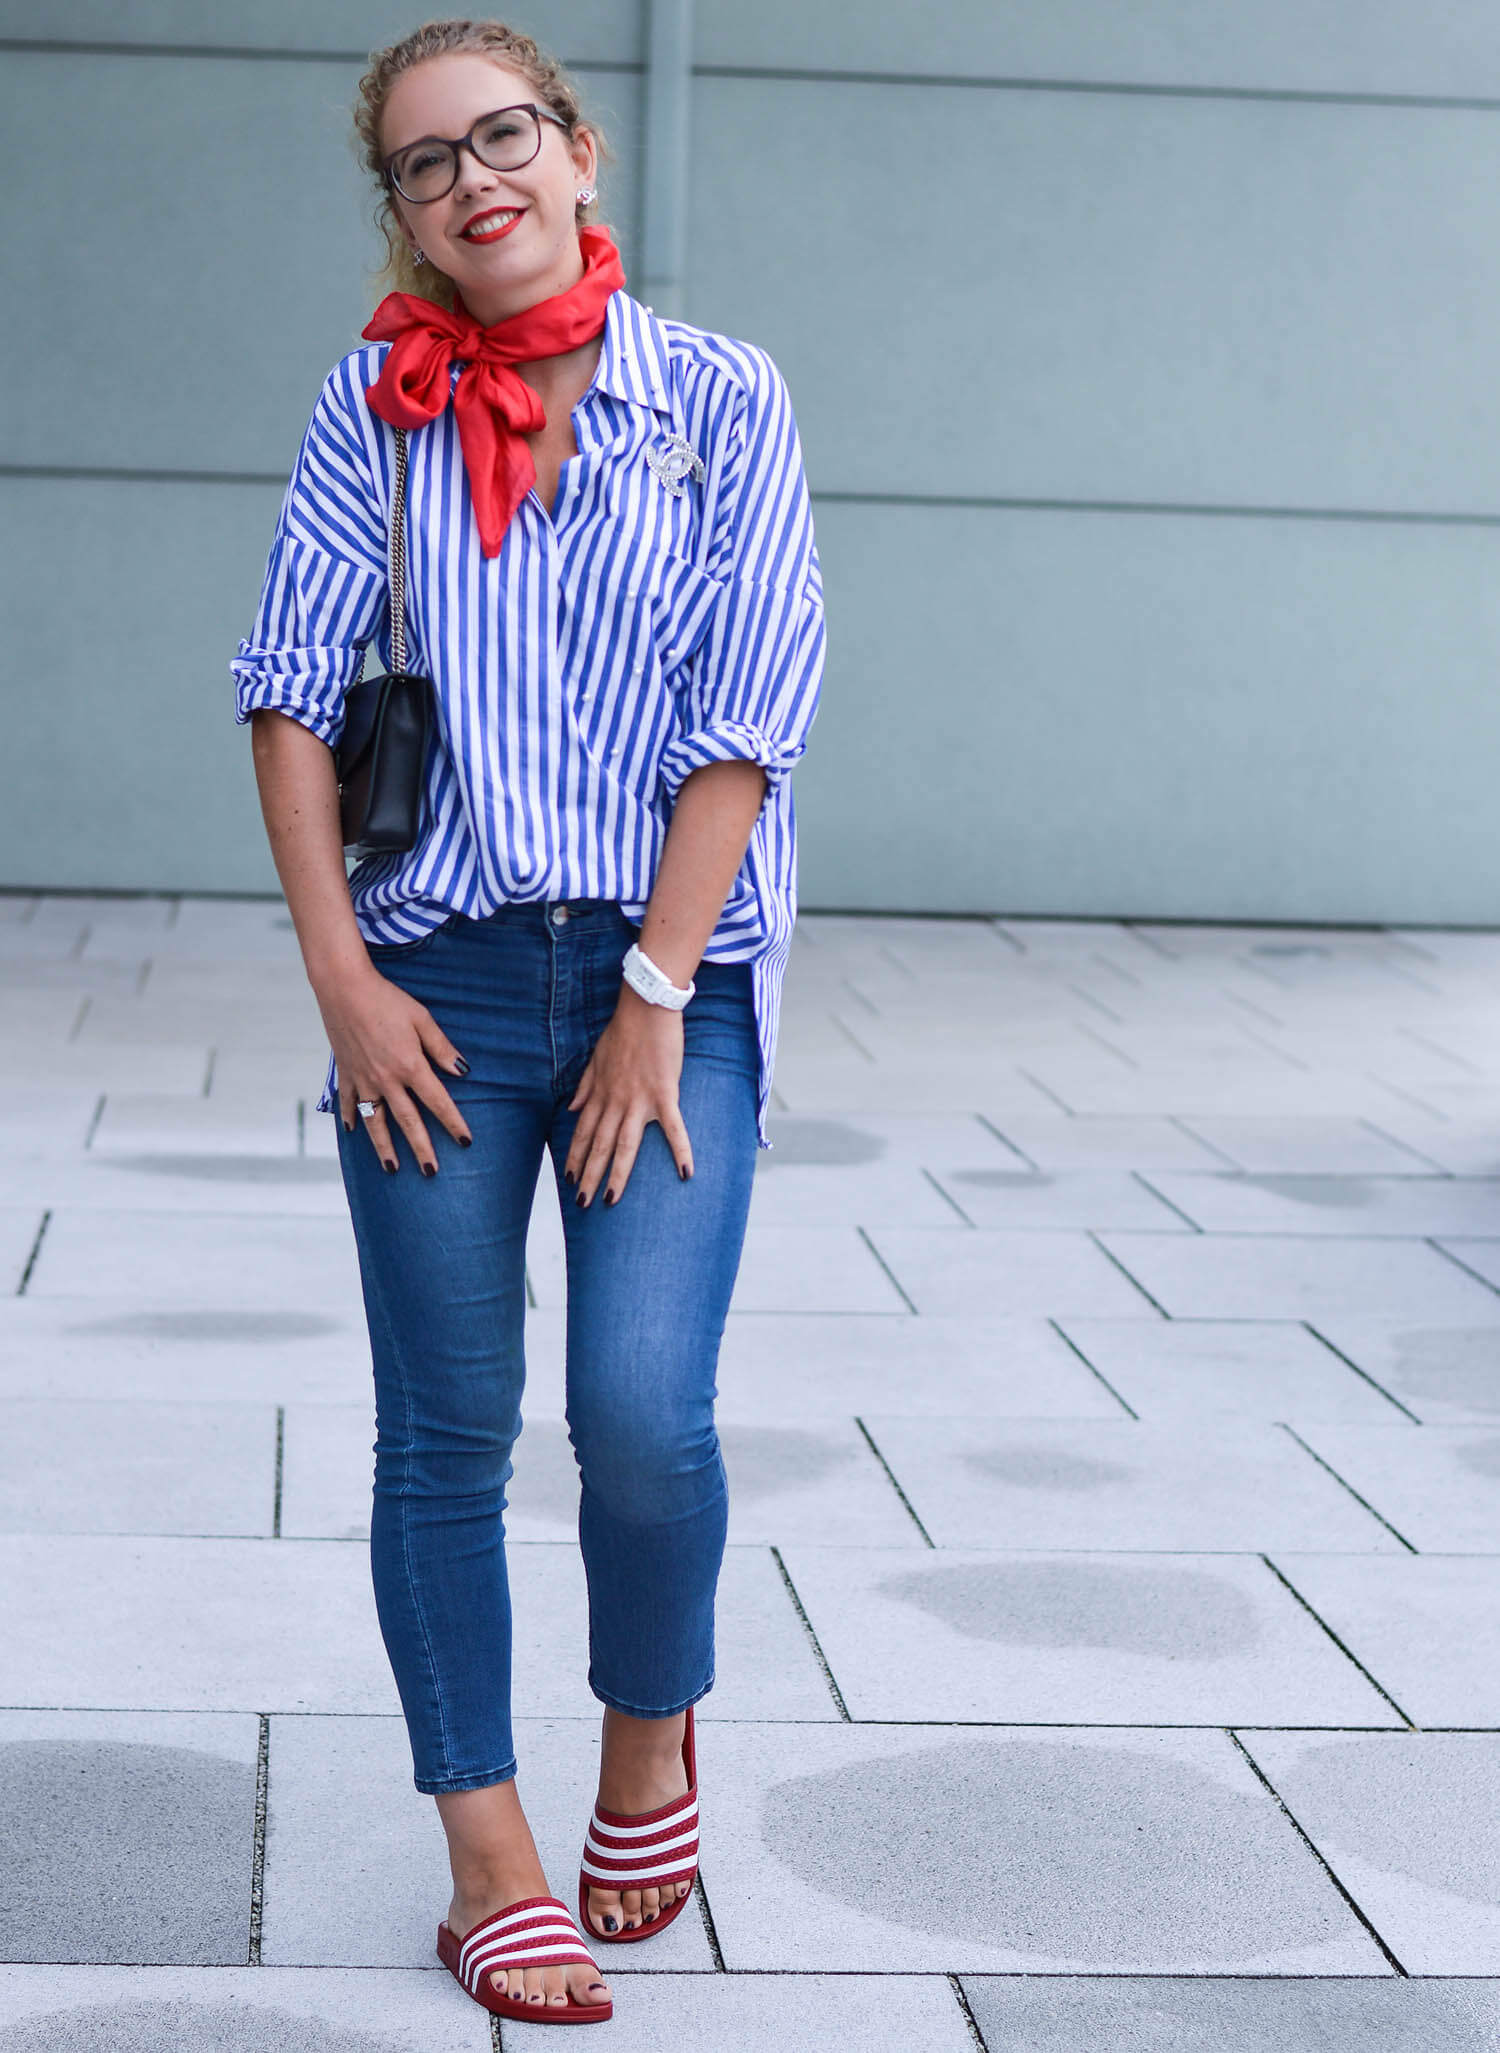 kationette-fashionblog-nrw-outfit-zara-Striped-blouse-Cropped-Jeans-Adiletten